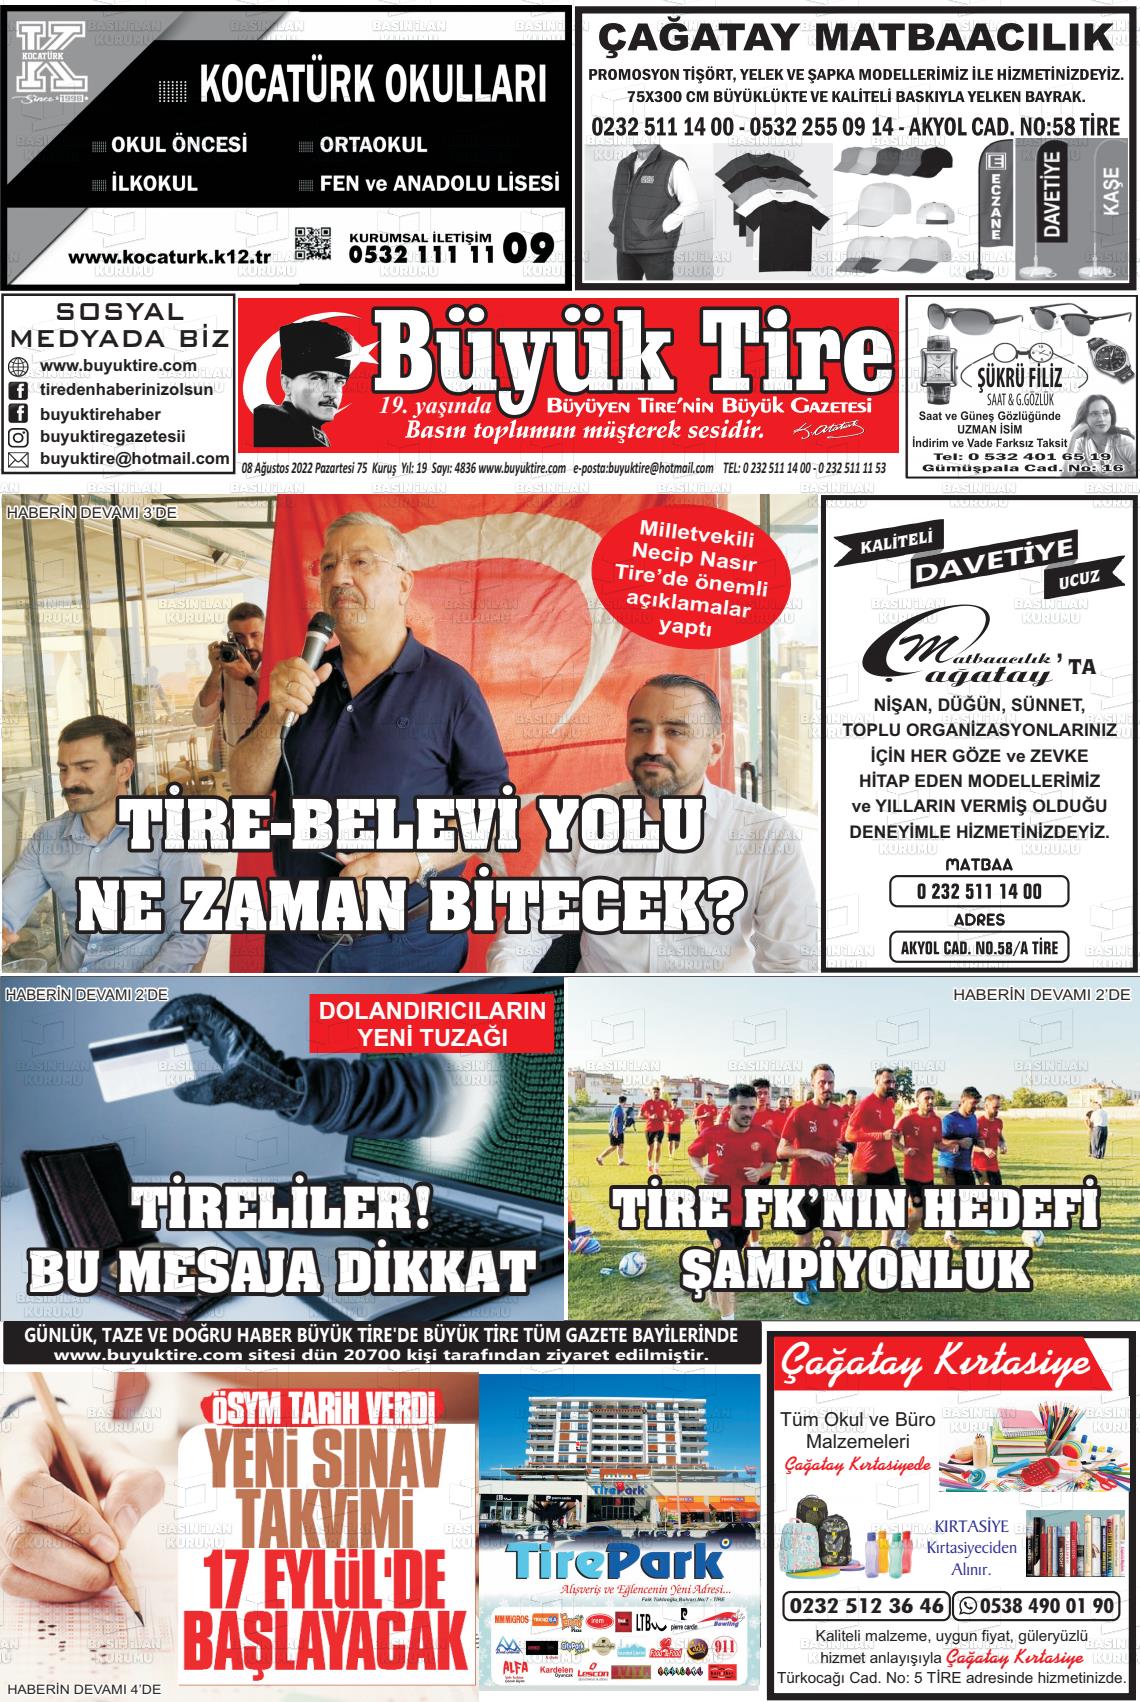 08 Ağustos 2022 Büyük Tire Gazete Manşeti